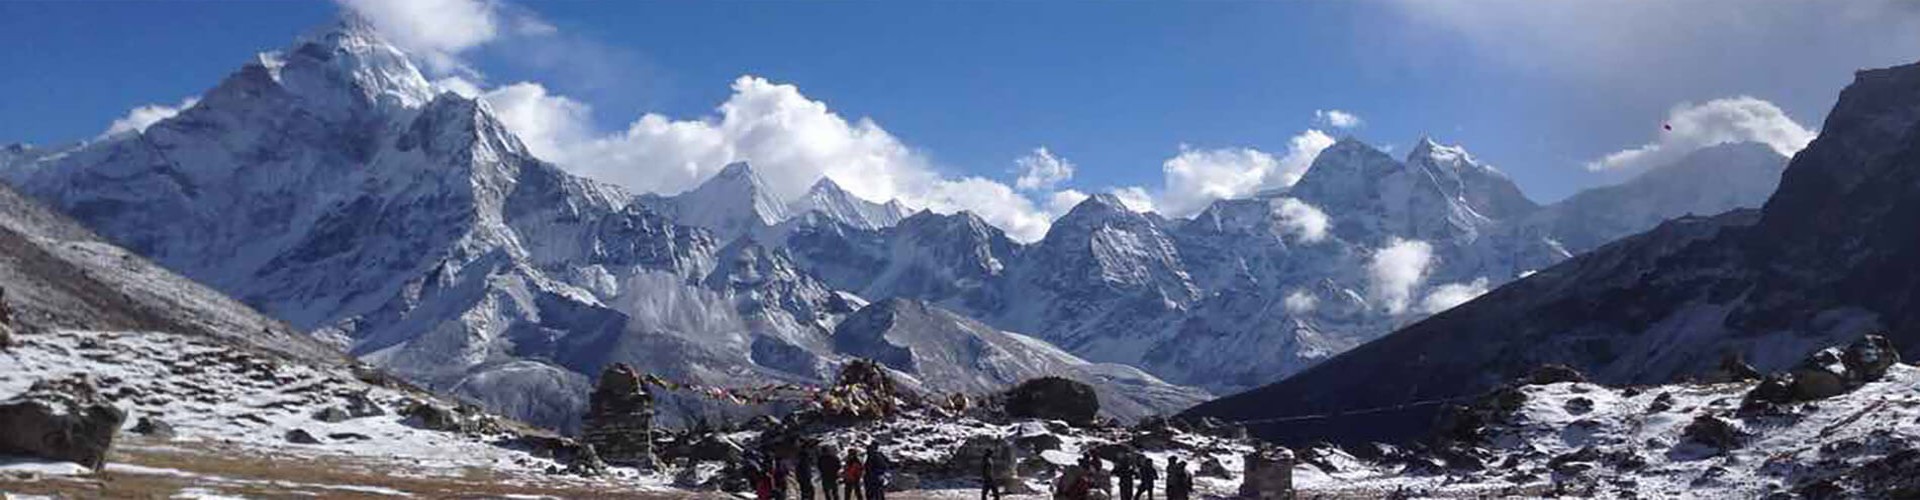 Everest base camp trek routes